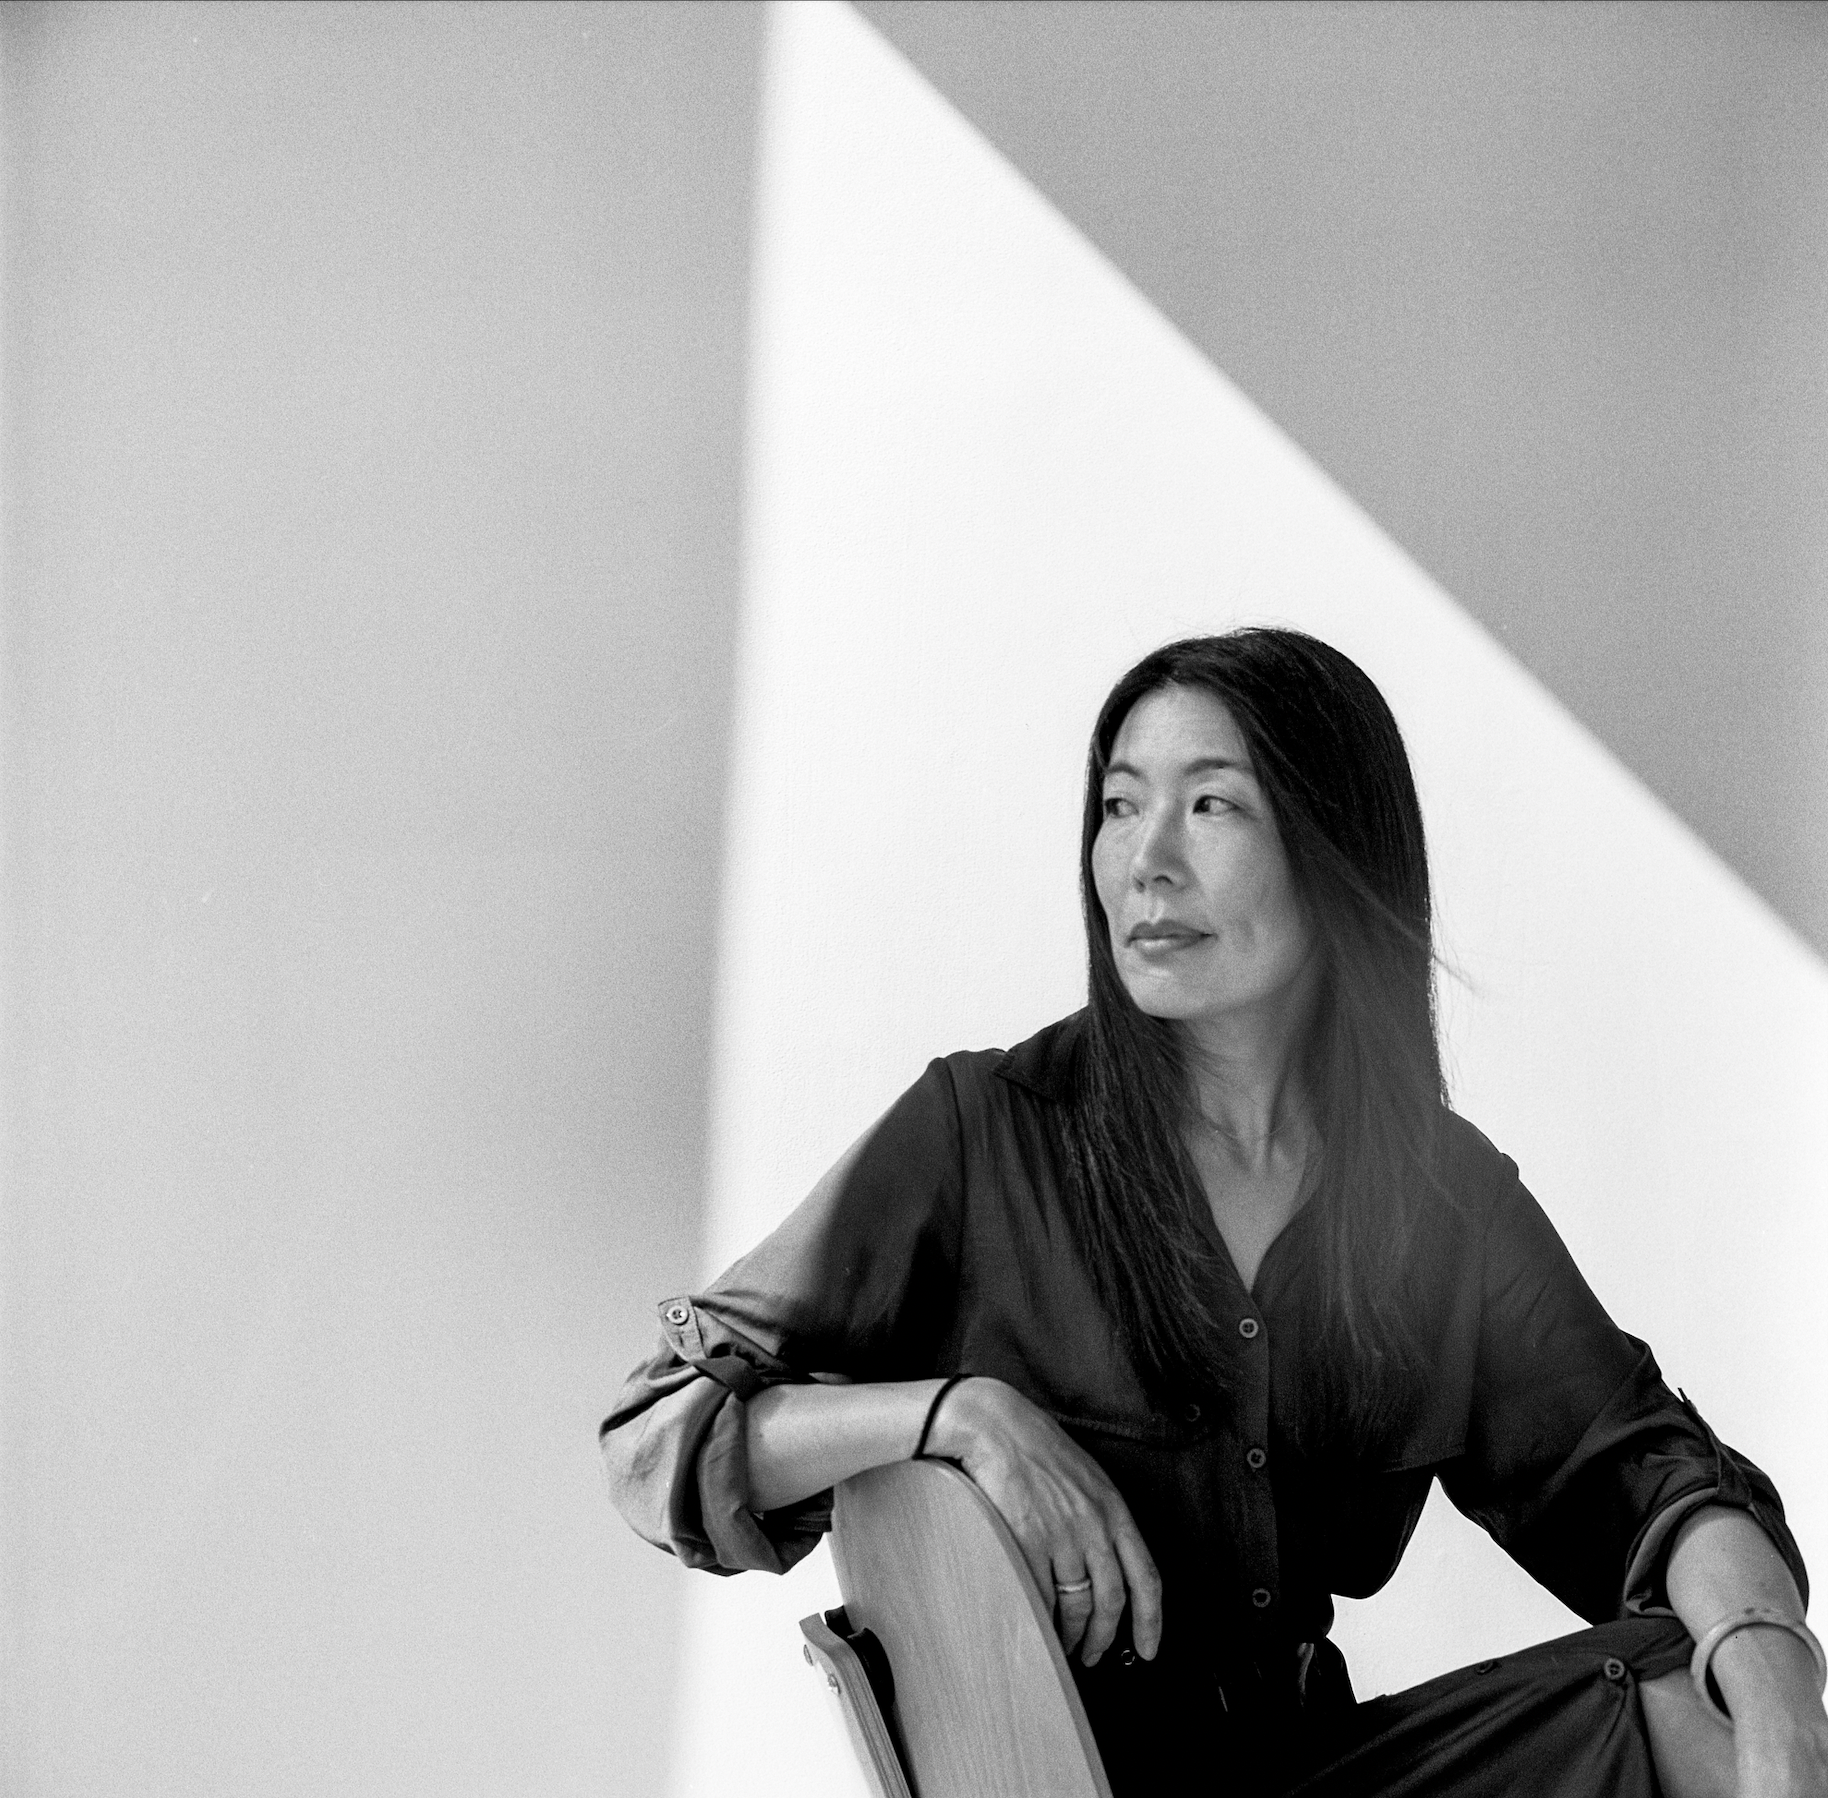 Pulitzer Prize Winner Woo Reveals Inspiration from Korean Film Icon